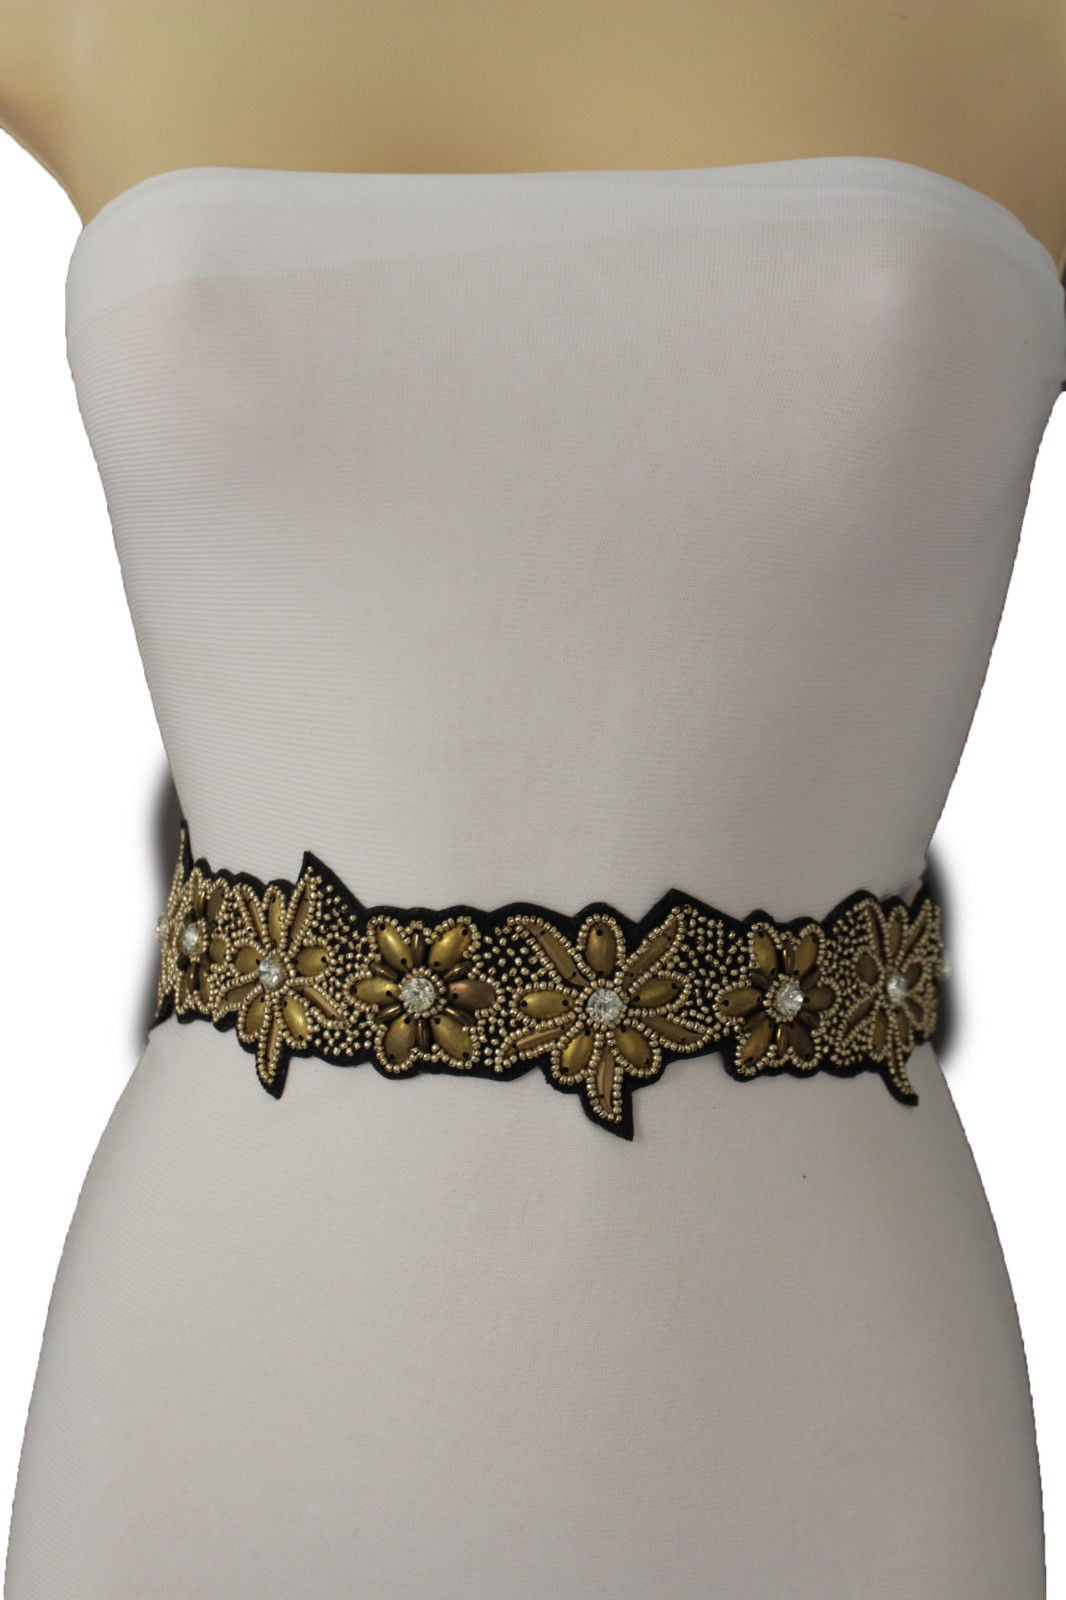 TFJ Women Dressy Fashion Gold Mesh Metal Choker Short Necklace Jewelry Set Silver Bling Beads Pendant